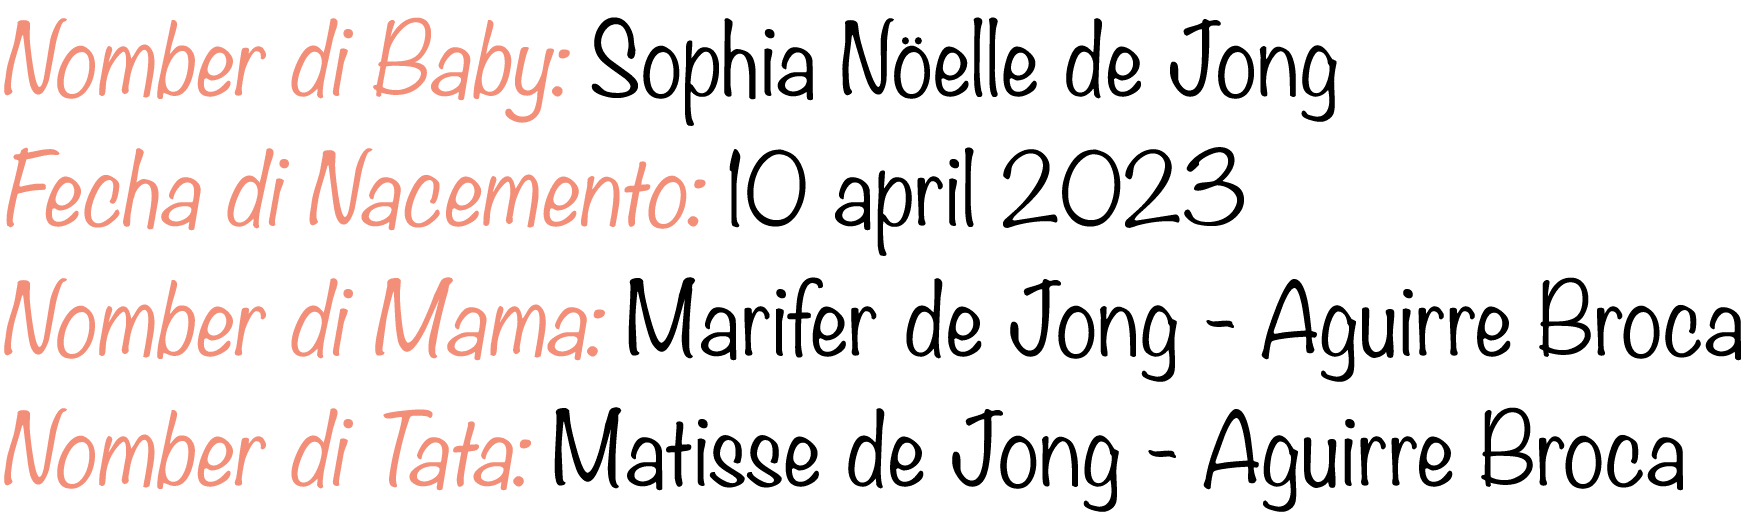 Nomber di Baby: Sophia N elle de Jong Fecha di Nacemento: 10 april 2023 Nomber di Mama: Marifer de Jong Aguirre Broca...